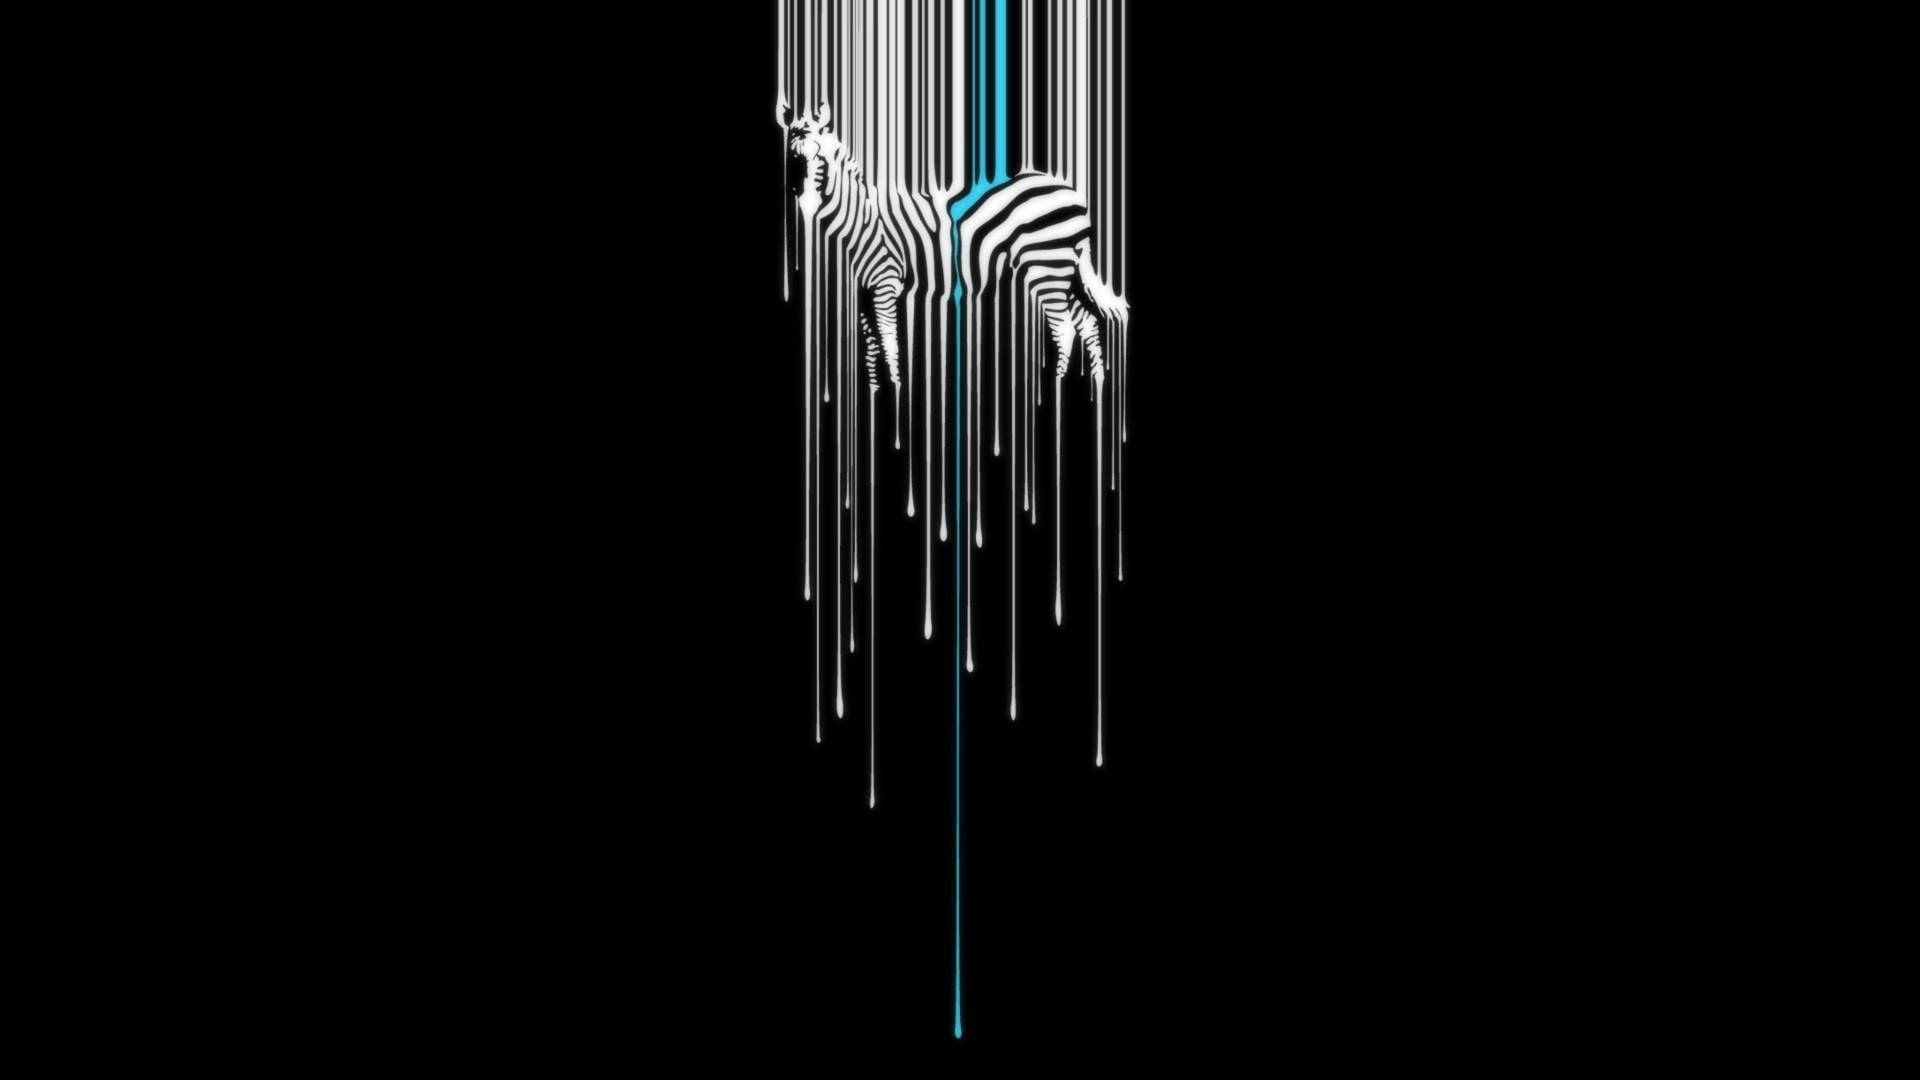 Zebra In Black Digital Artwork Background